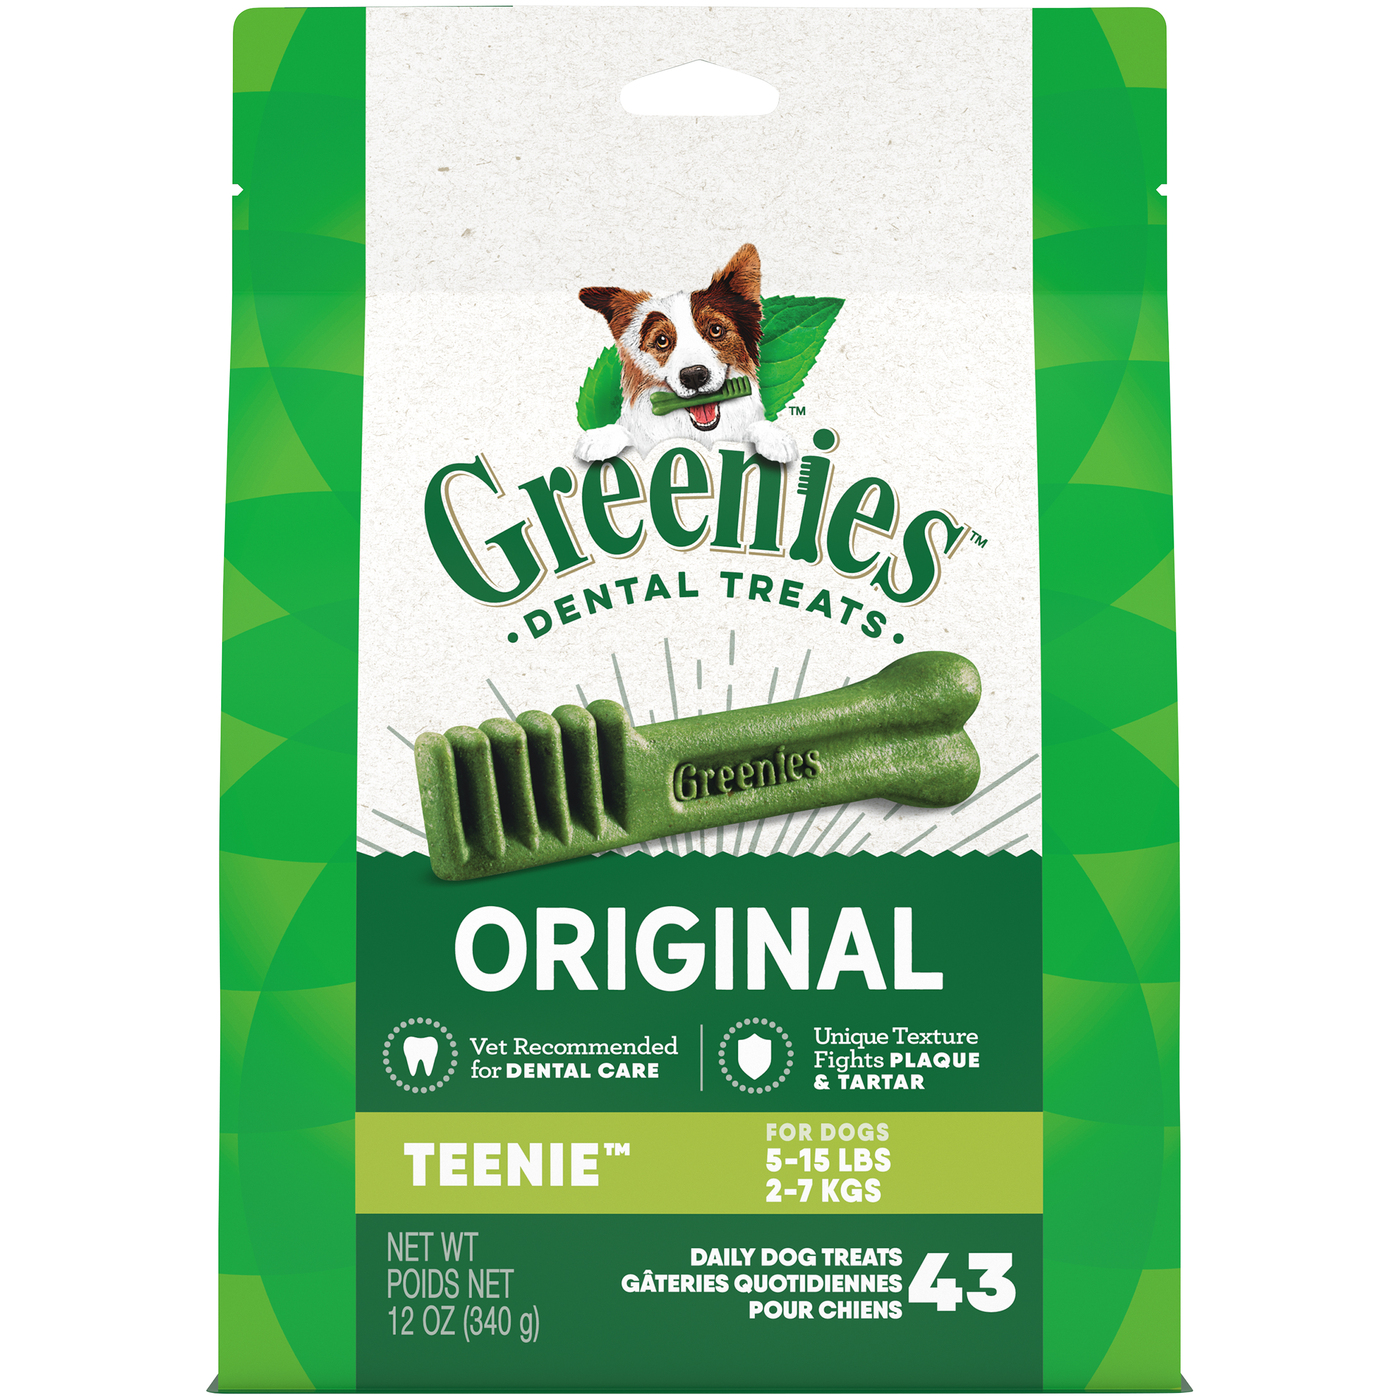 Greenies Dental Treats Original Teenie Dog Treats 12 oz. Bag